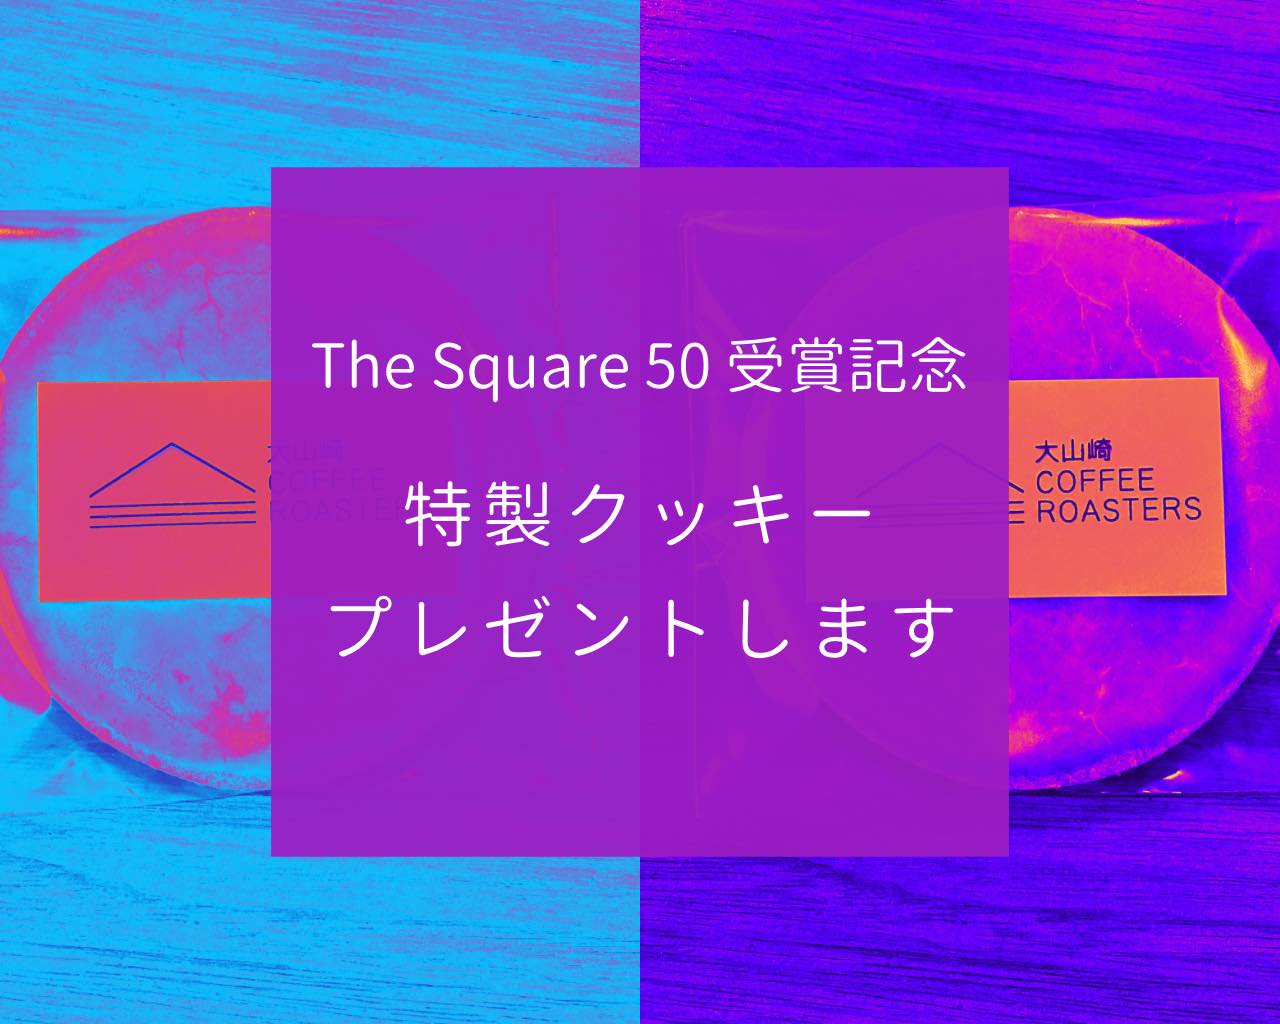 The Square 50（ソーシャルエキスパート部門）最優秀賞受賞と特製クッキープレゼント企画